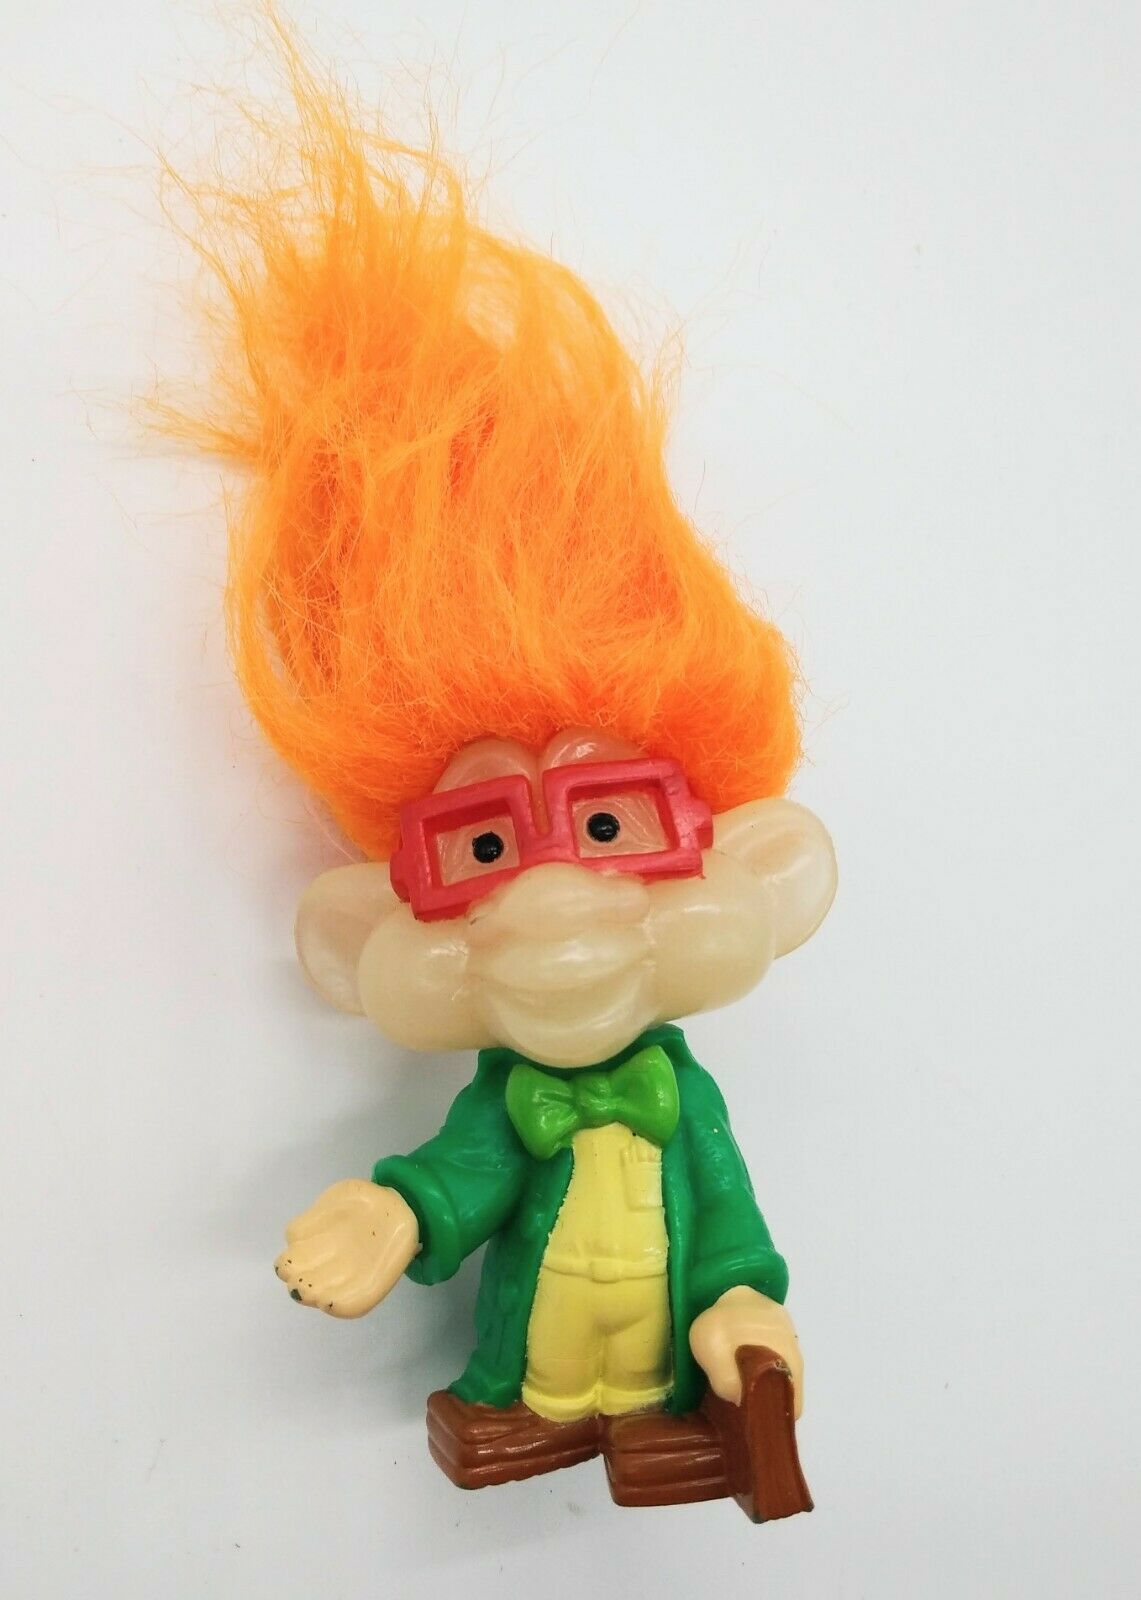 VTG Troll Doll Burger King Kids Club 1993 Glow in the Dark Orange Hair Glasses - $5.89